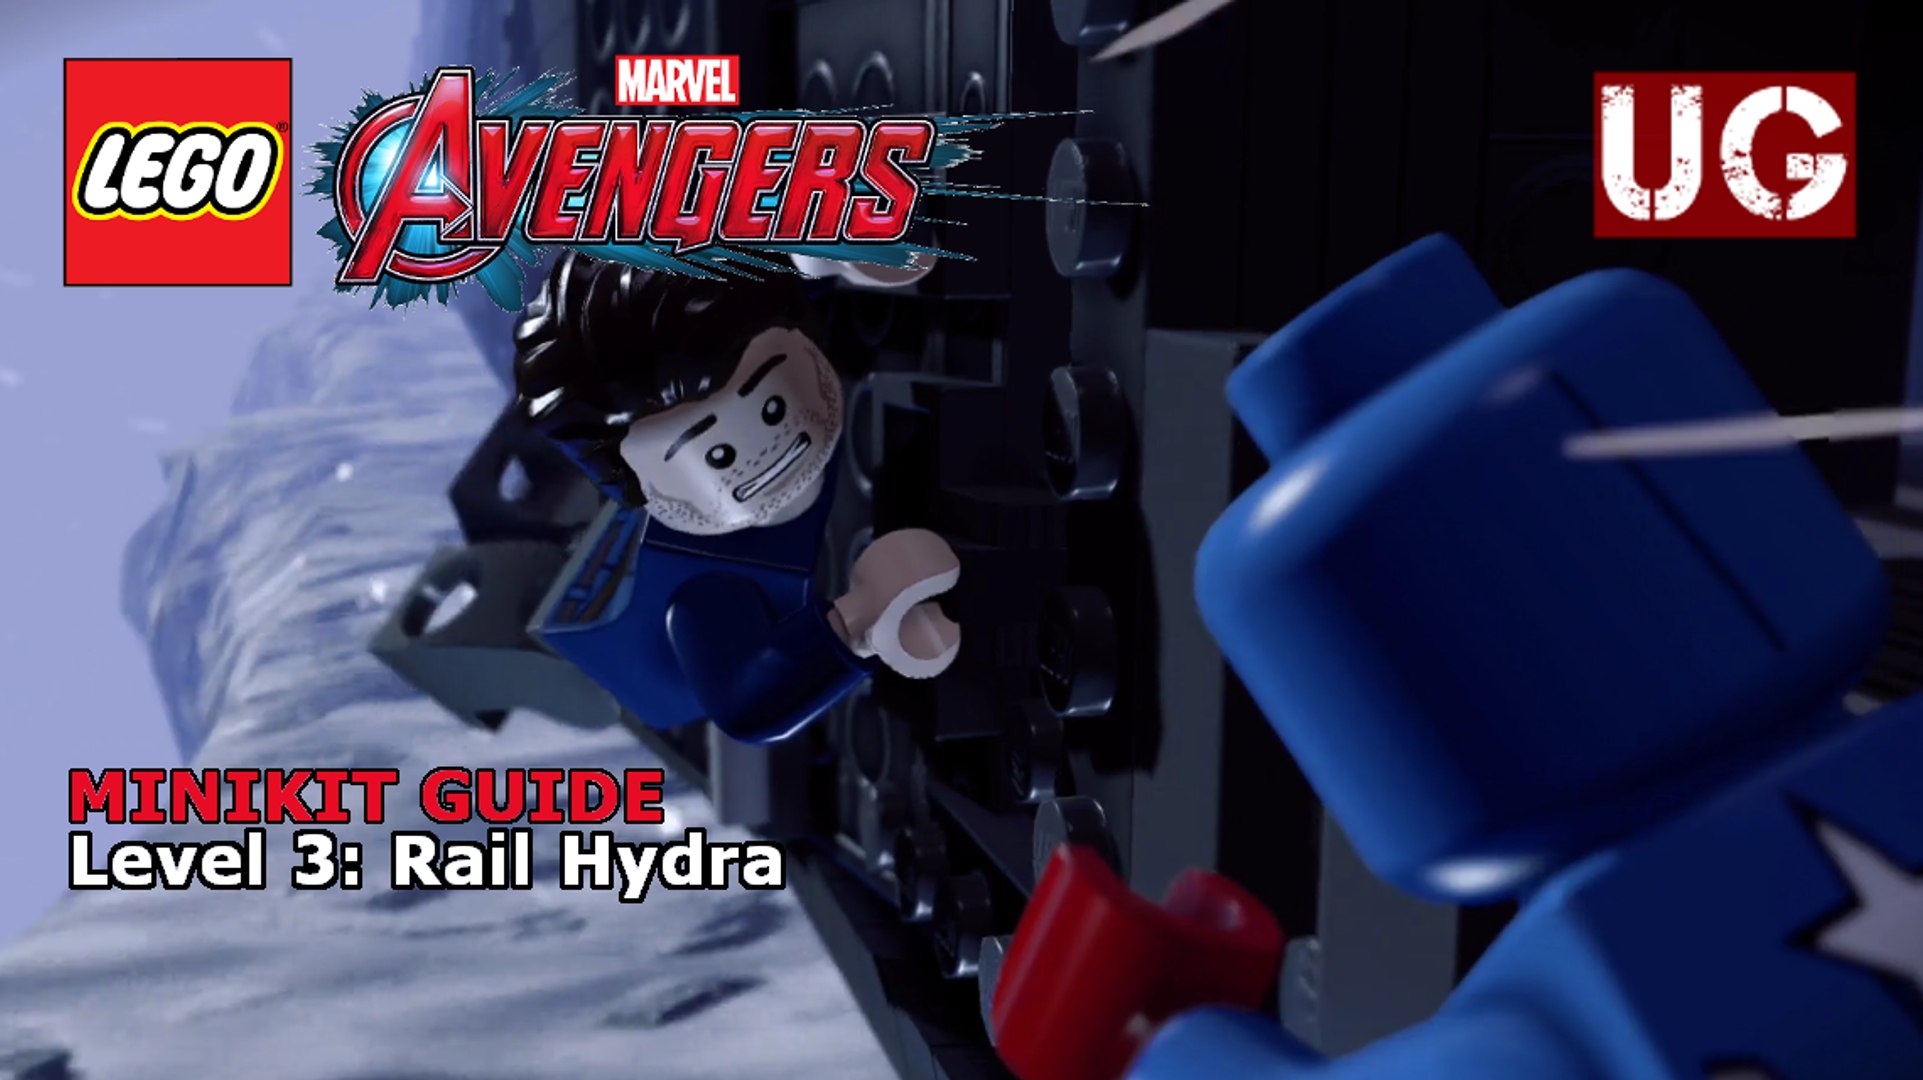 LEGO Avengers - Level 3: Rail Hydra Minikit Guide video